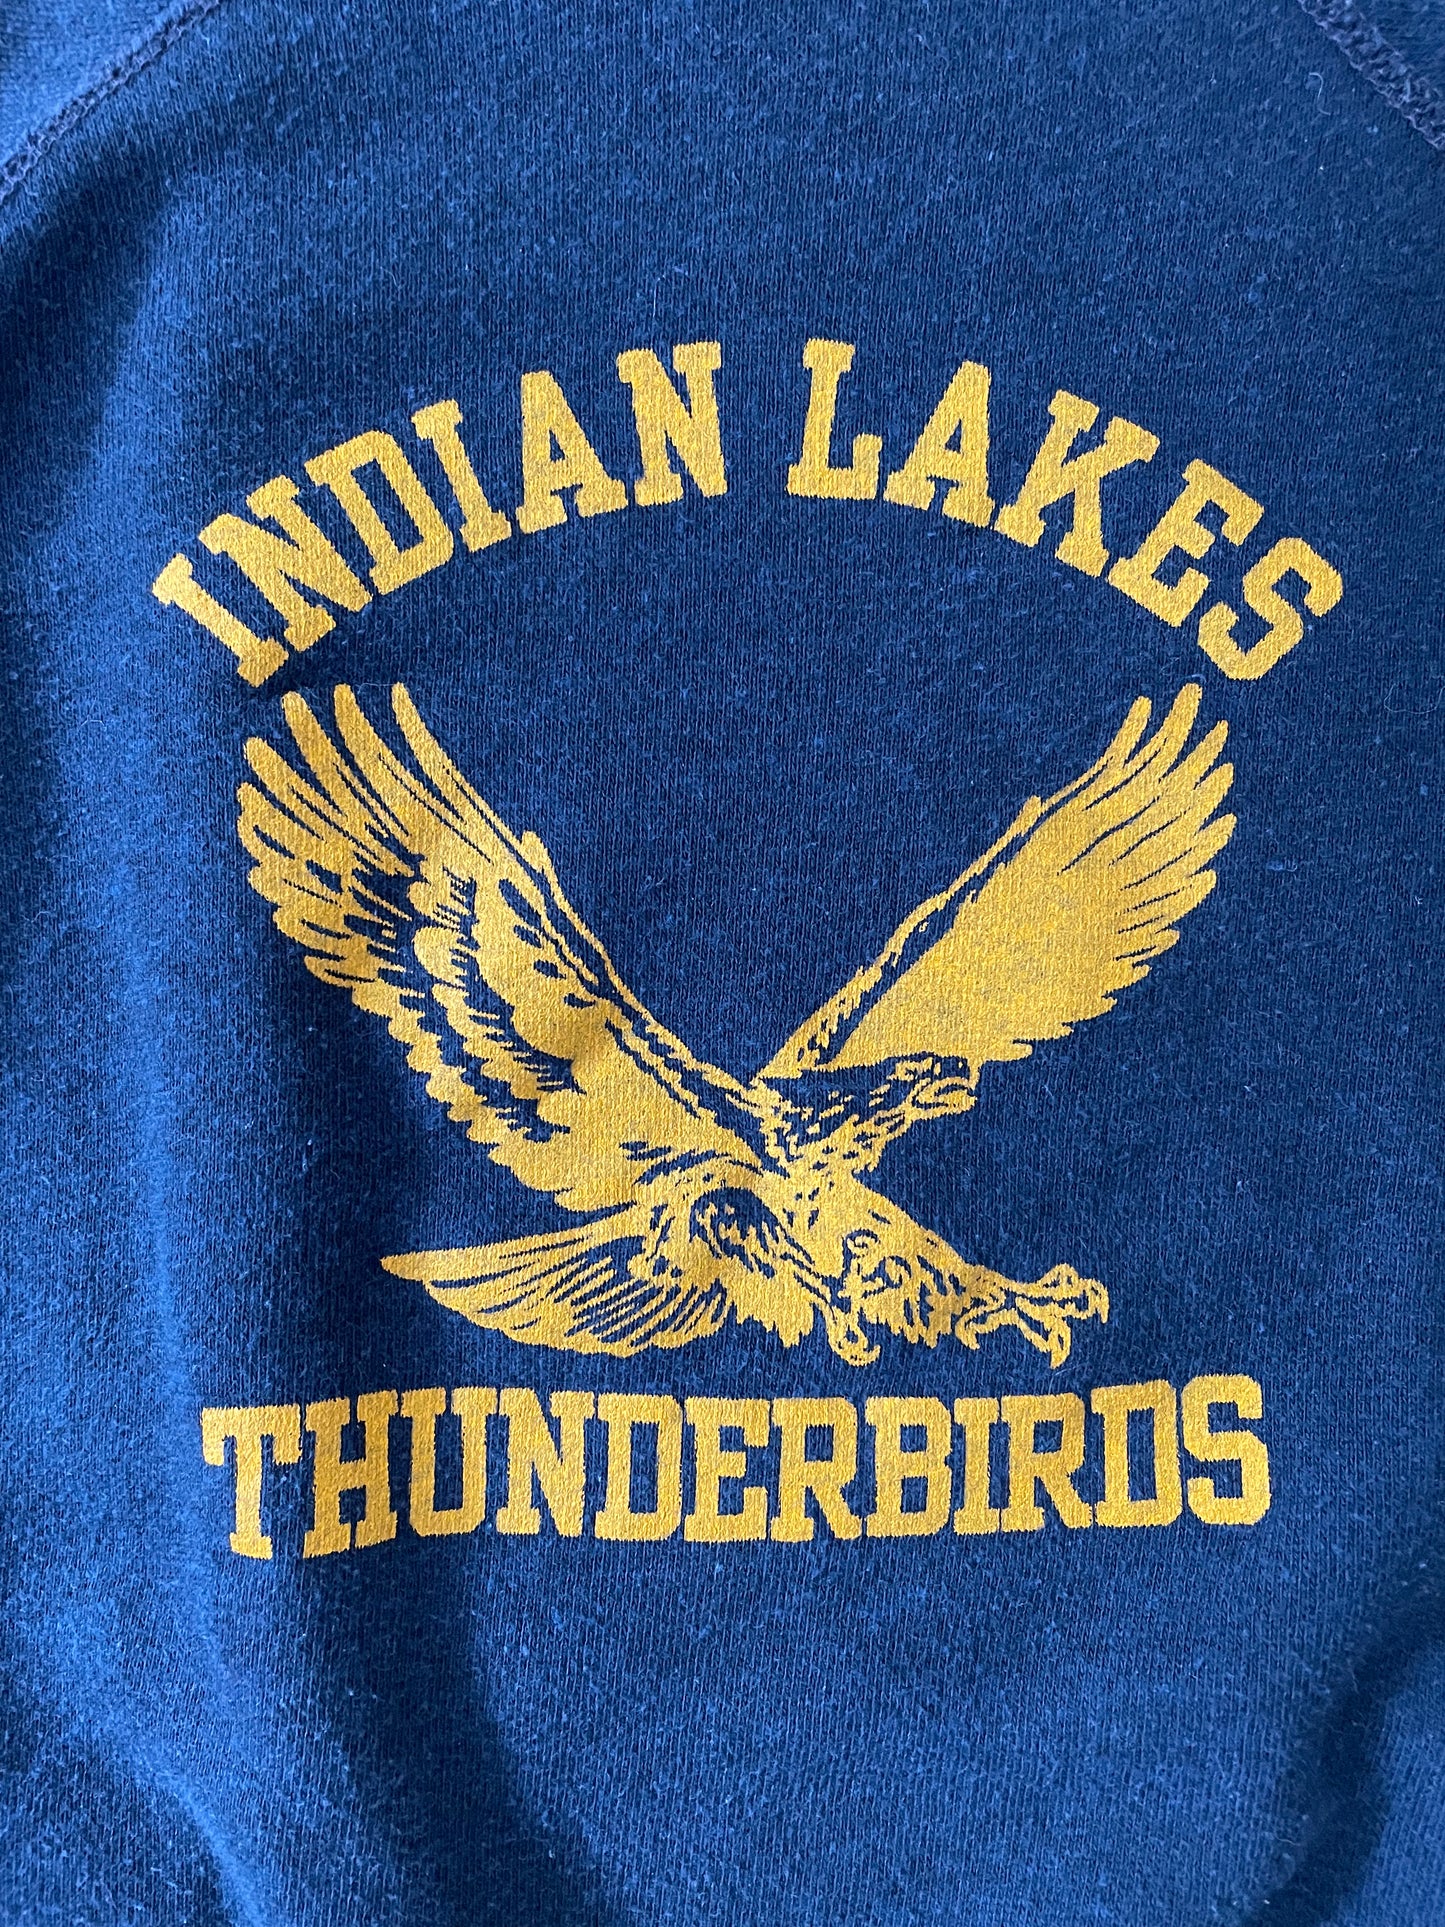 70s Indian Lakes Thunderbirds Sweatshirt